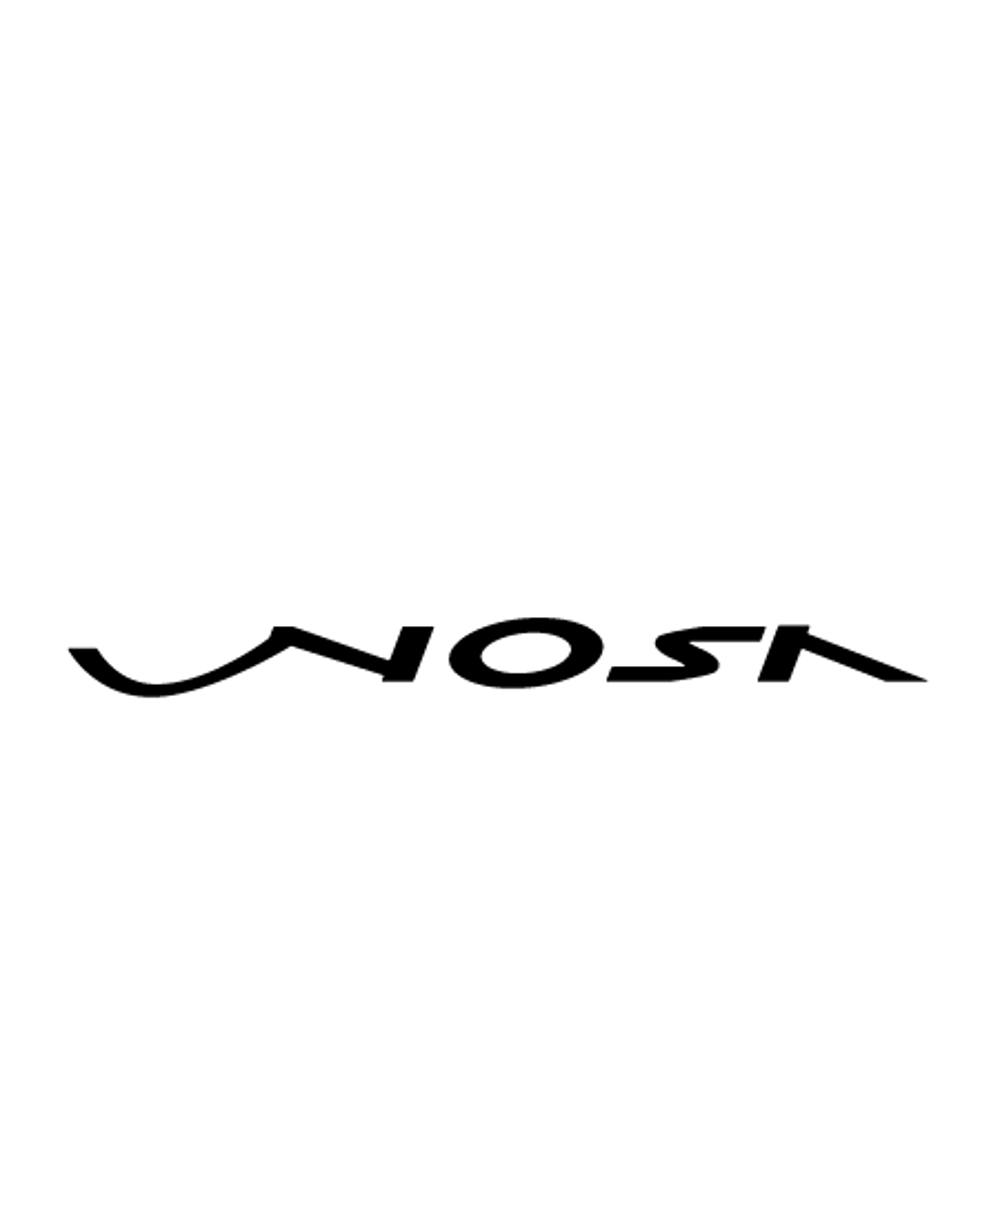 TBSが運営する女性向けメディア「Nosh」サイトロゴ